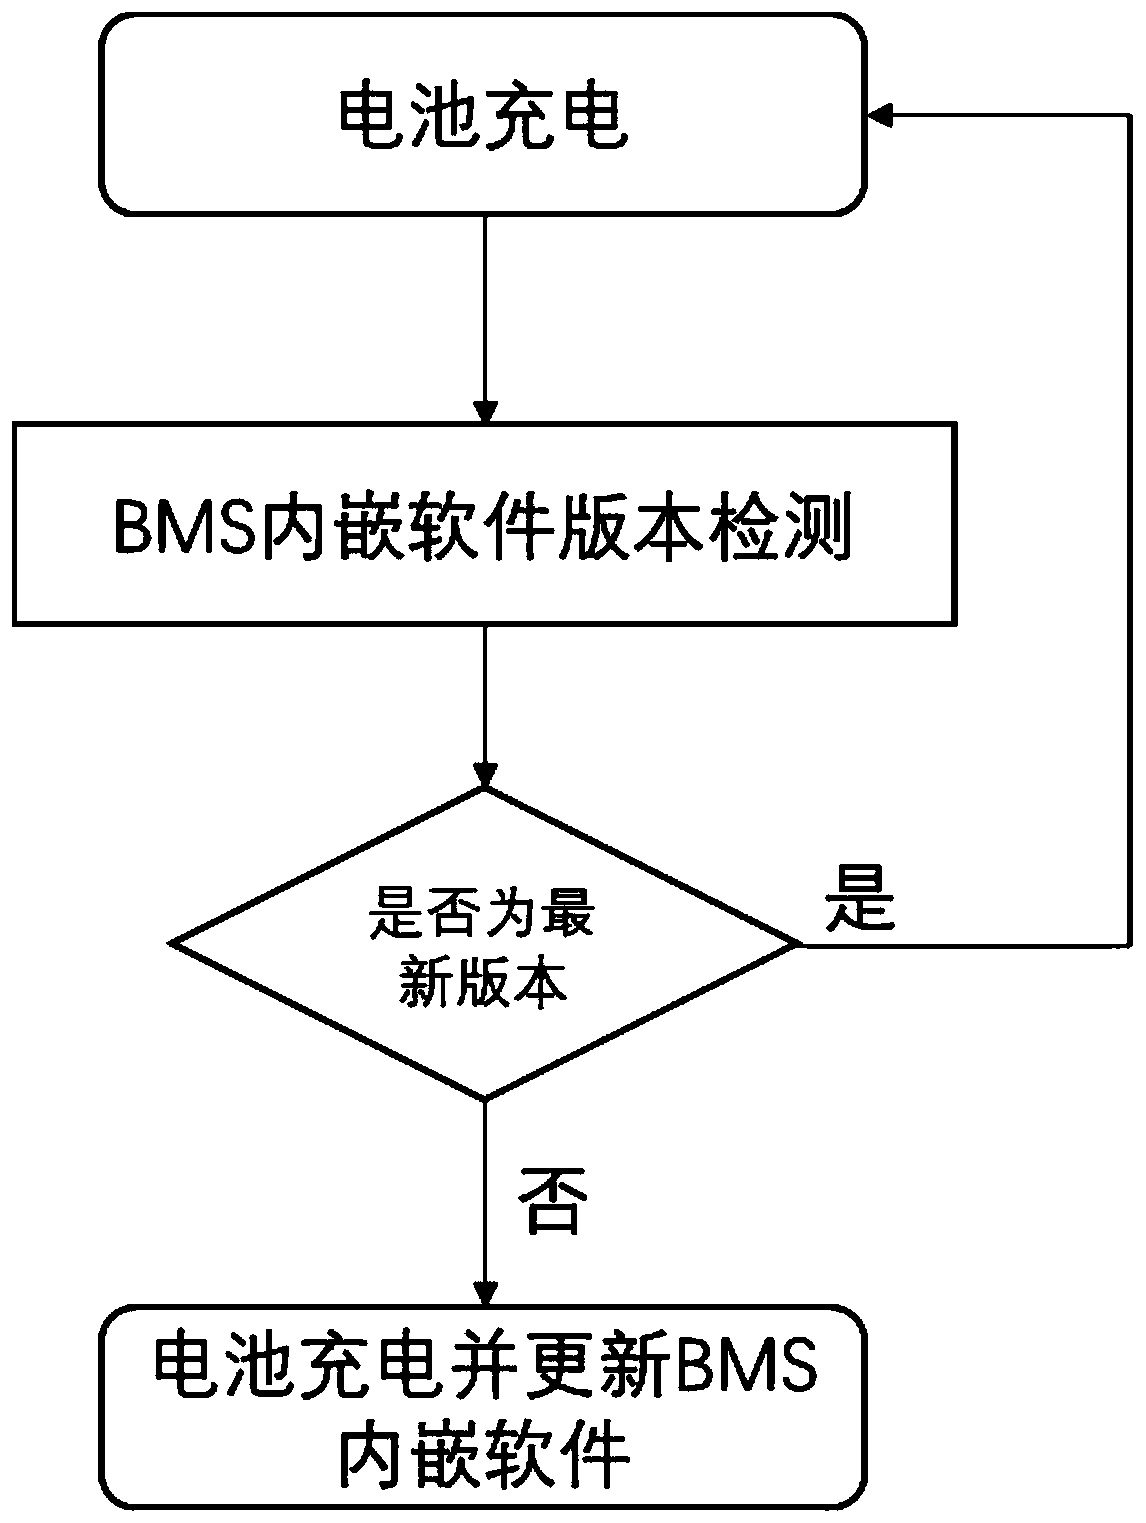 Method for updating BMS embedded software of shared battery